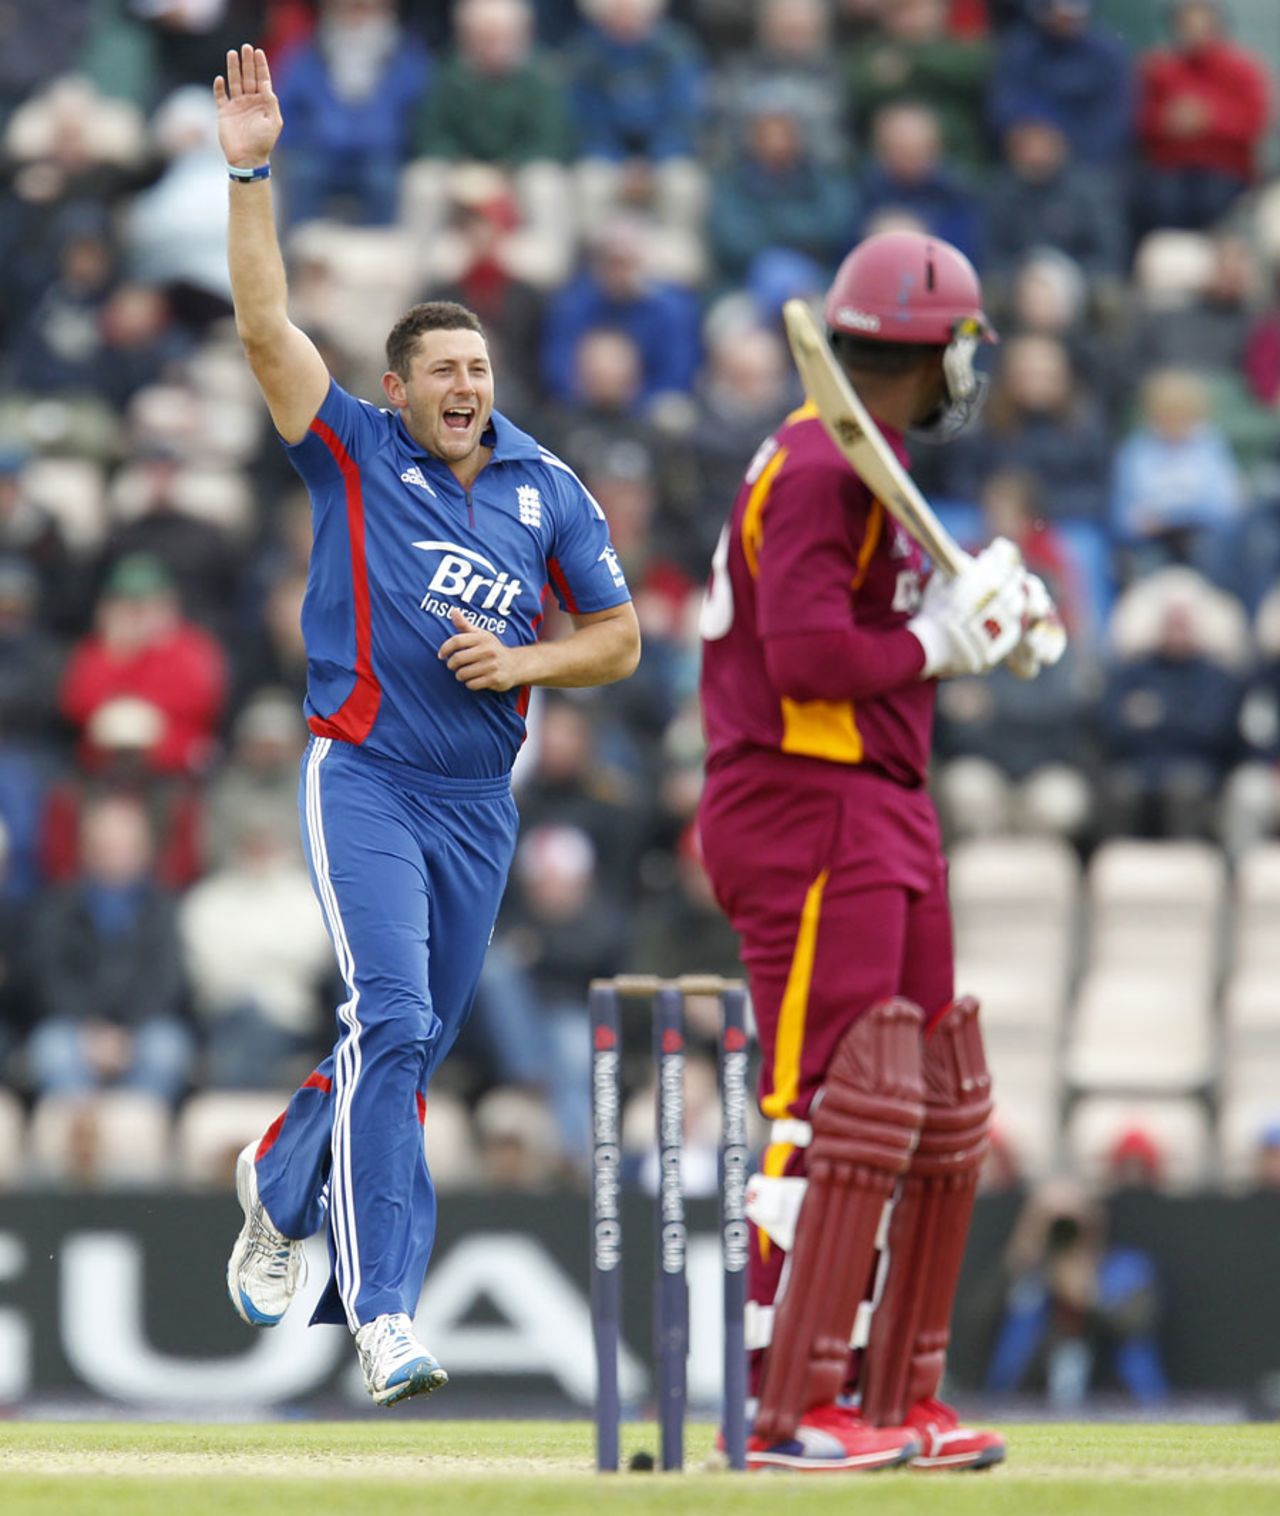 Tim Bresnan had Dwayne Smith caught behind for 56, England v West Indies, 1st ODI, West End, June 16, 2012